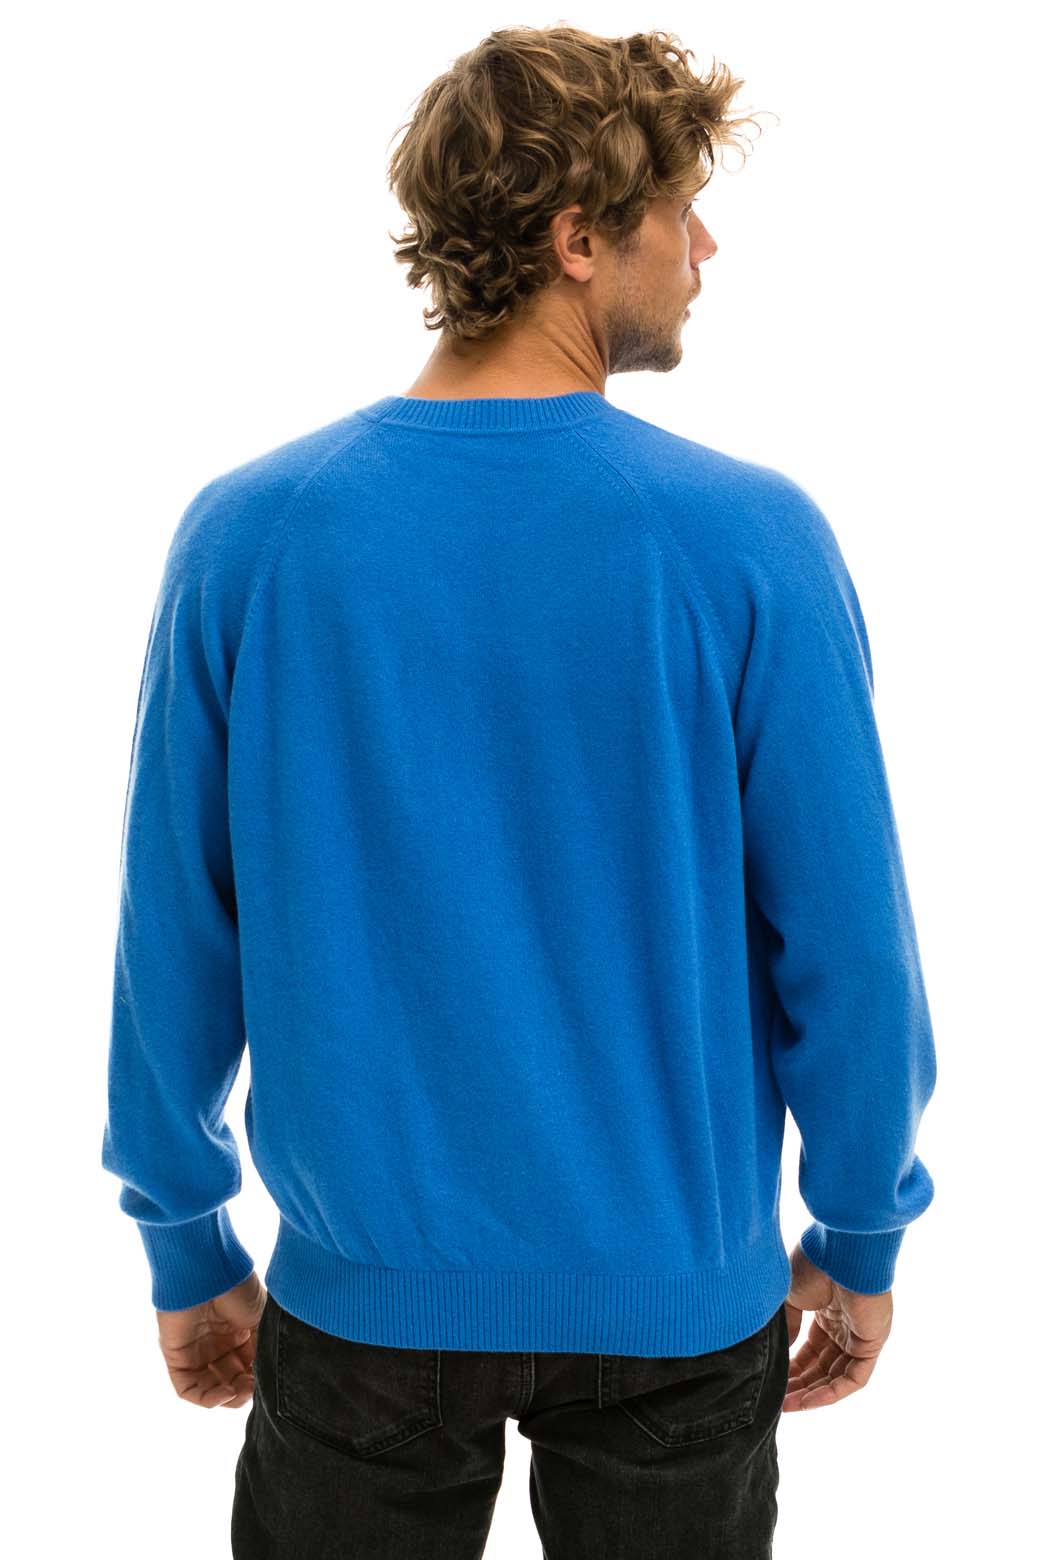 UNISEX BOLT CASHMERE LIGHT SWEATER - VINTAGE BLUE Sweatshirt Aviator Nation 